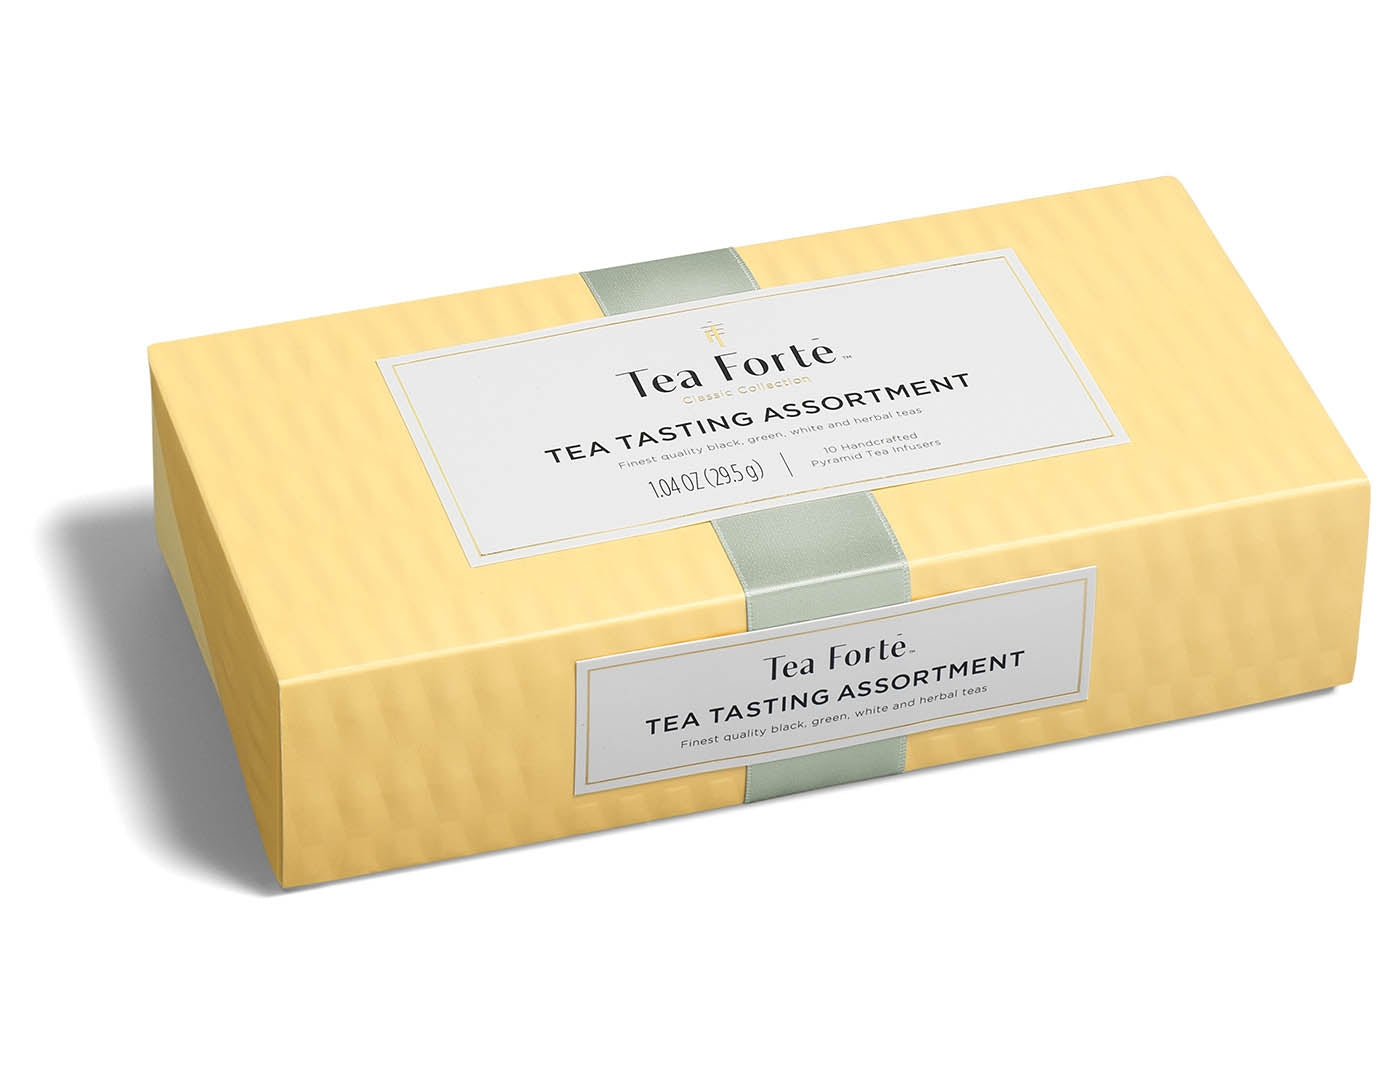 Tea Tasting tea assortment in a 10 count petite presentation box with lid closed